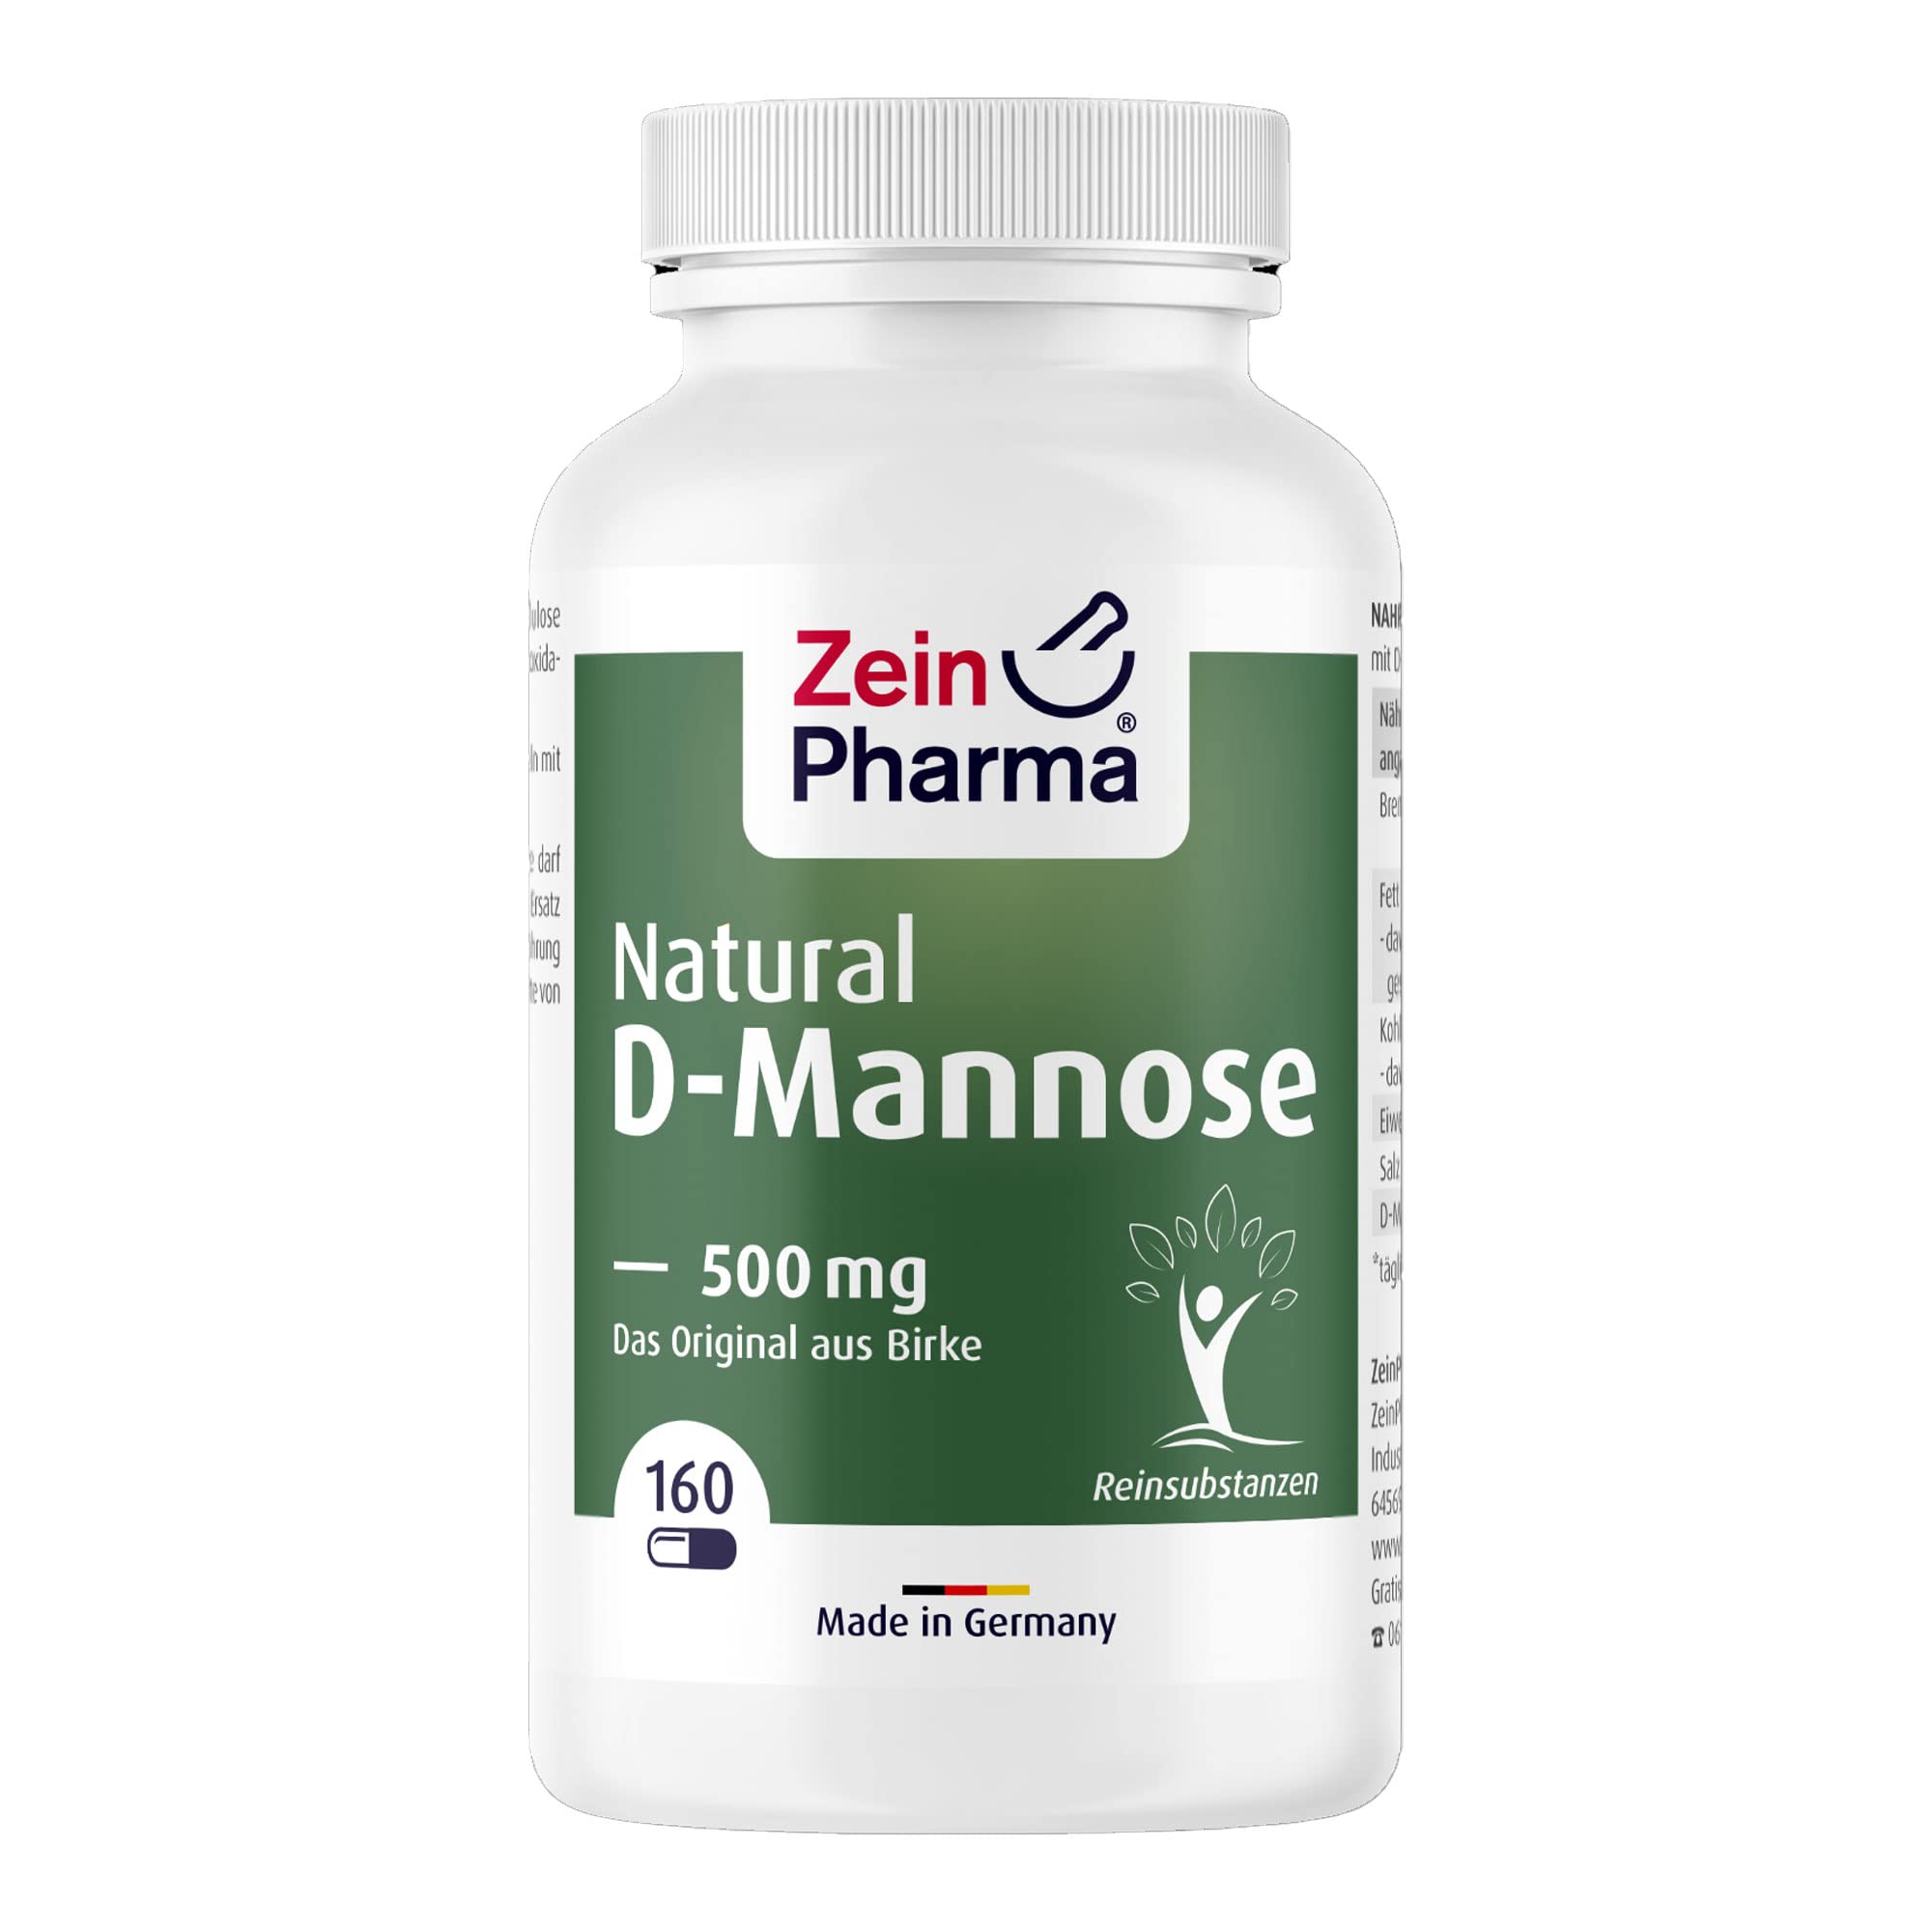 ZeinPharma Zein Pharma Natural D-Mannose, 500mg - 160 Kapseln, 99 g